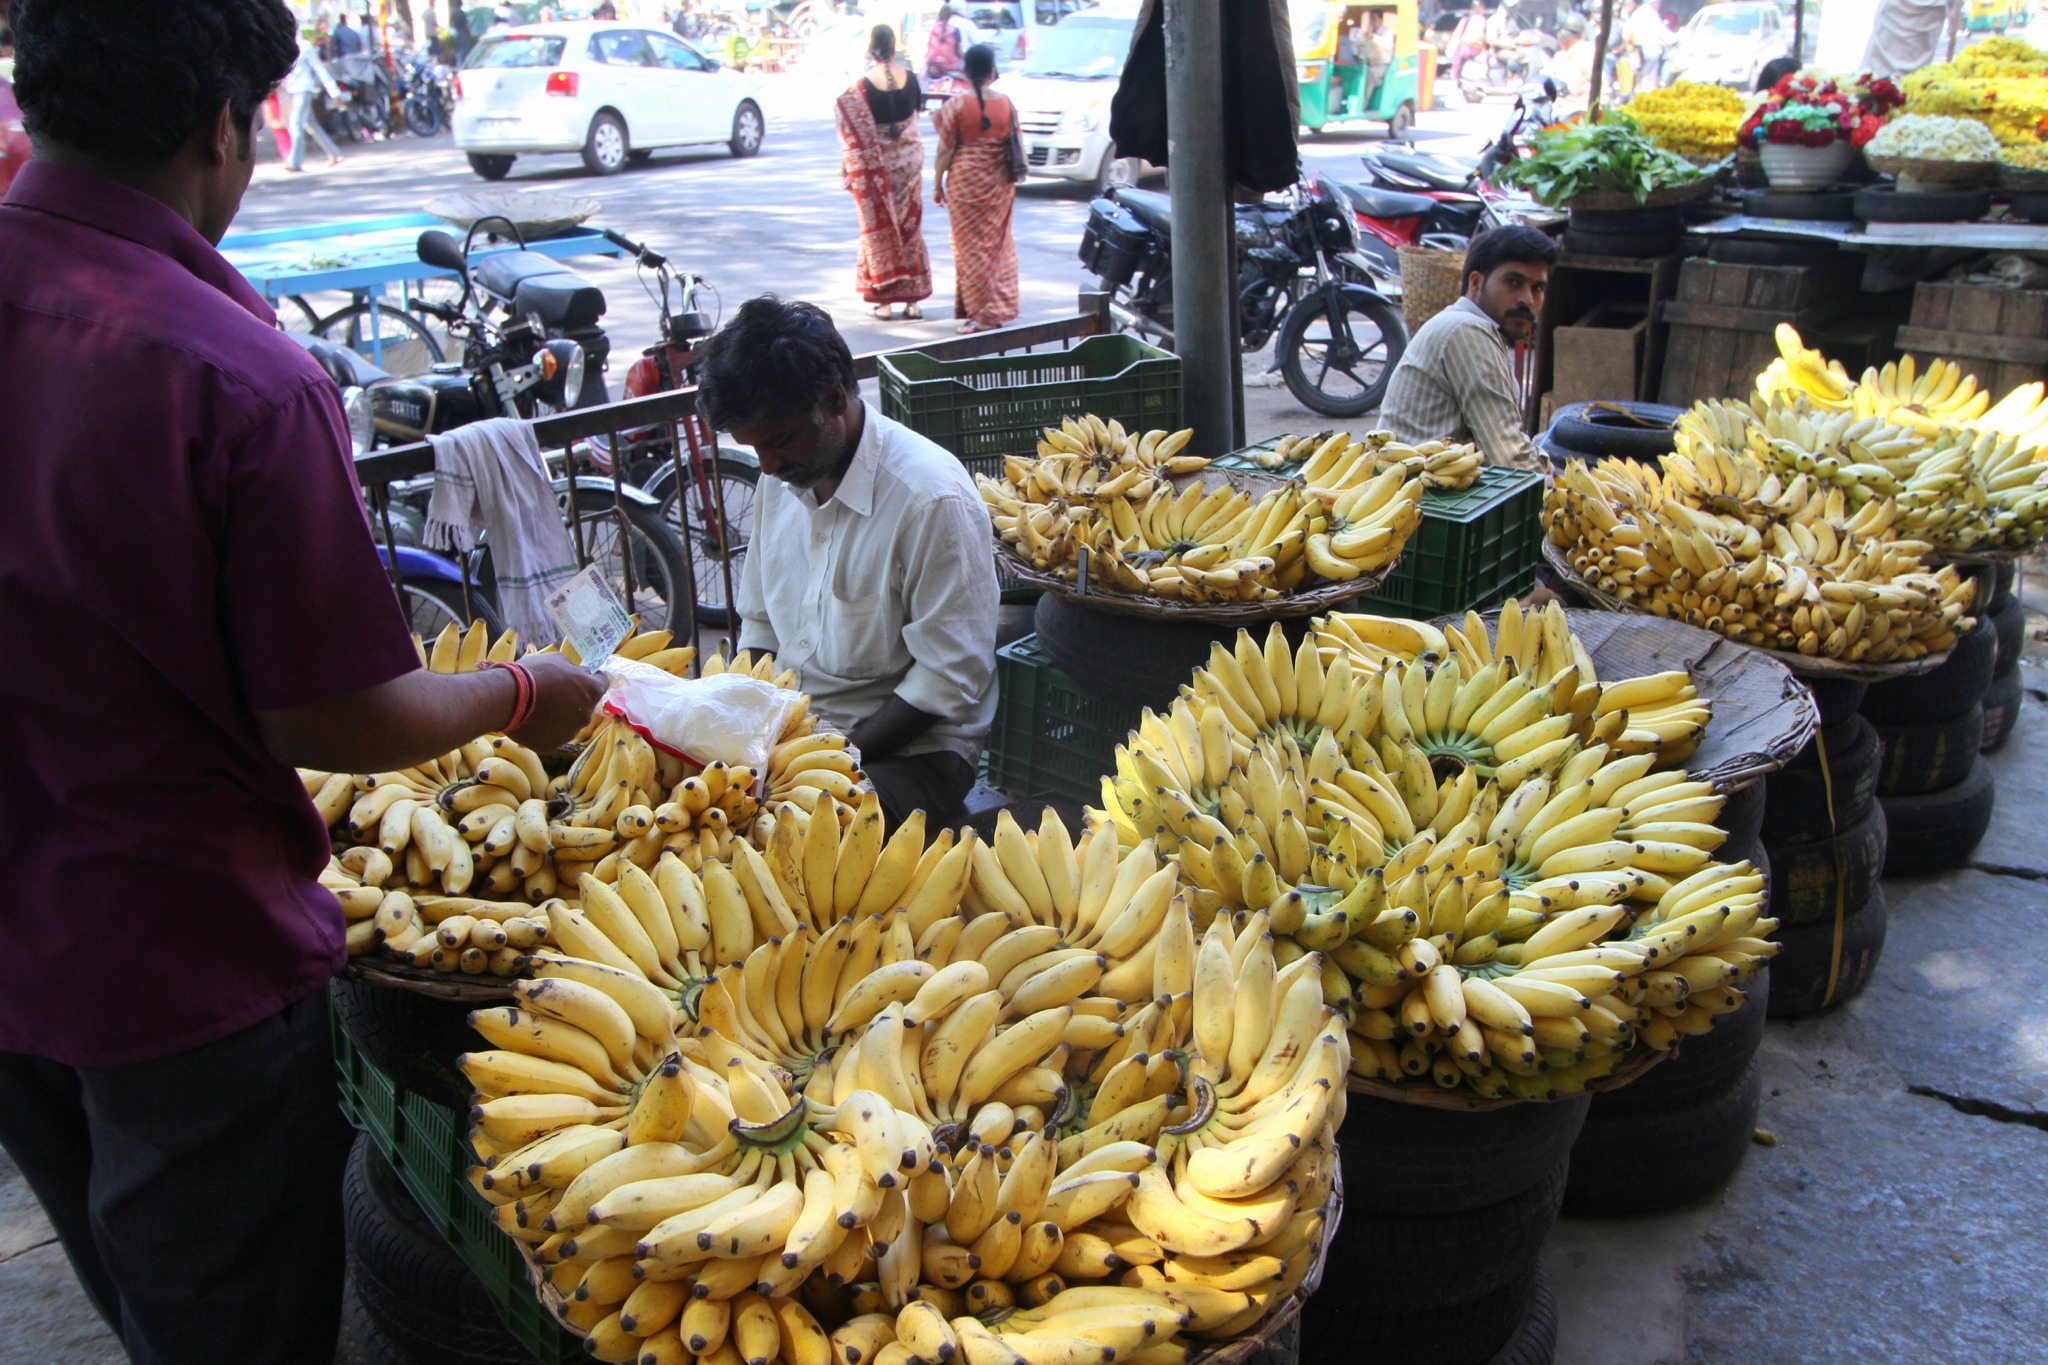 Gandhi Bazaar Bangalore